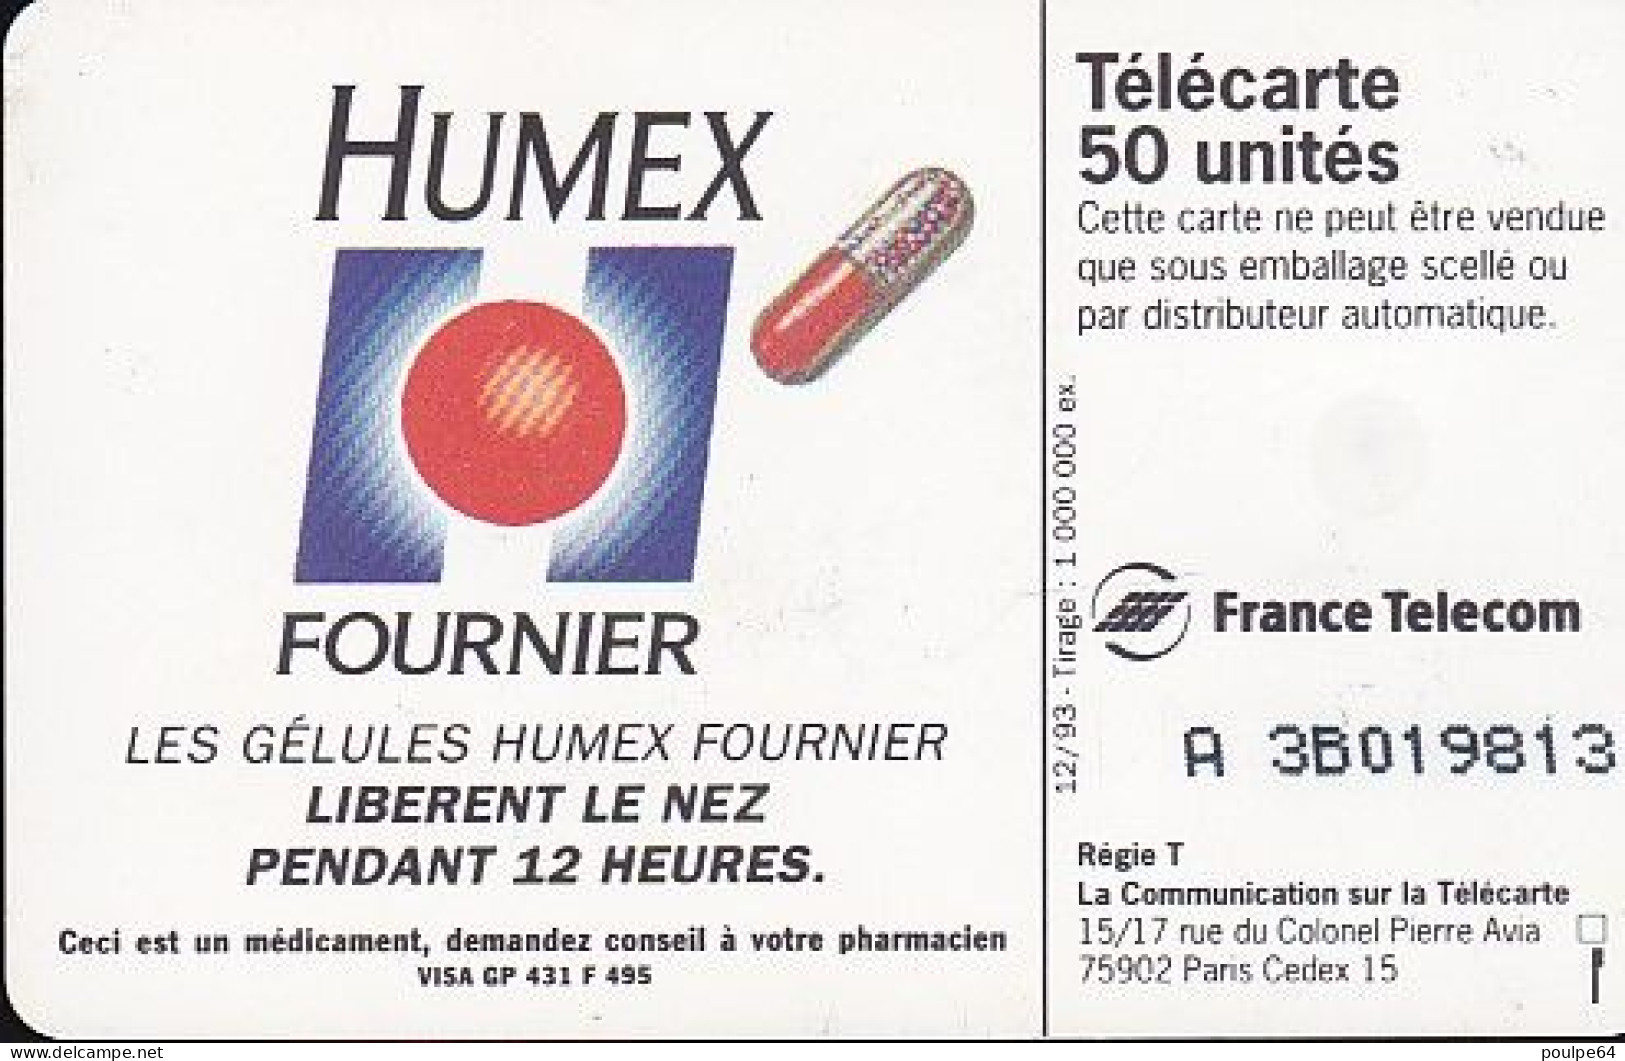 F446 - 12/1993 - HUMEX FOURNIER - 50 SO3 - 1993